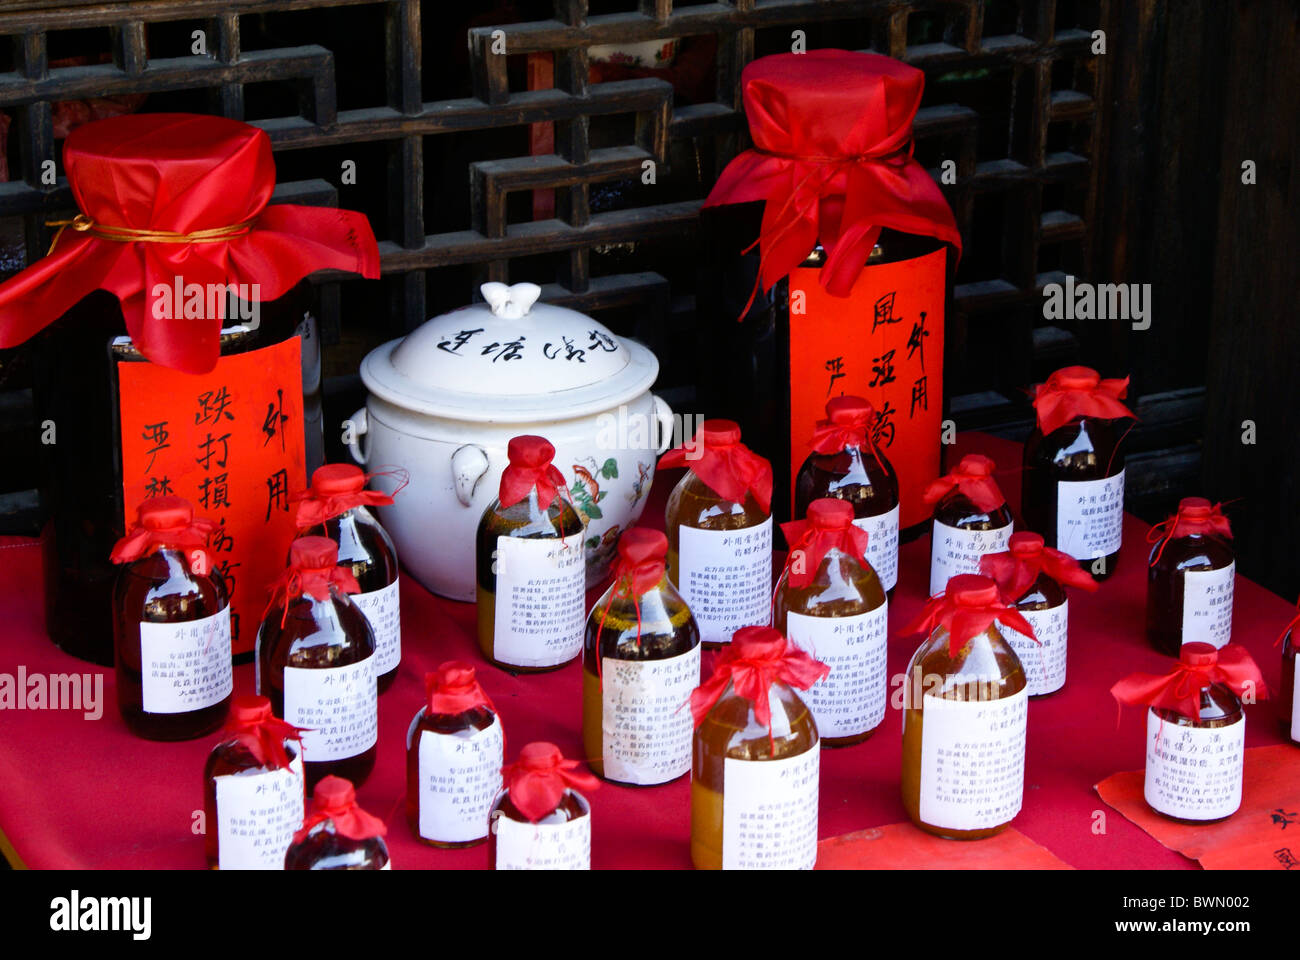 Traditional medicine display, Daxu ancient town, Guangxi, China Stock Photo